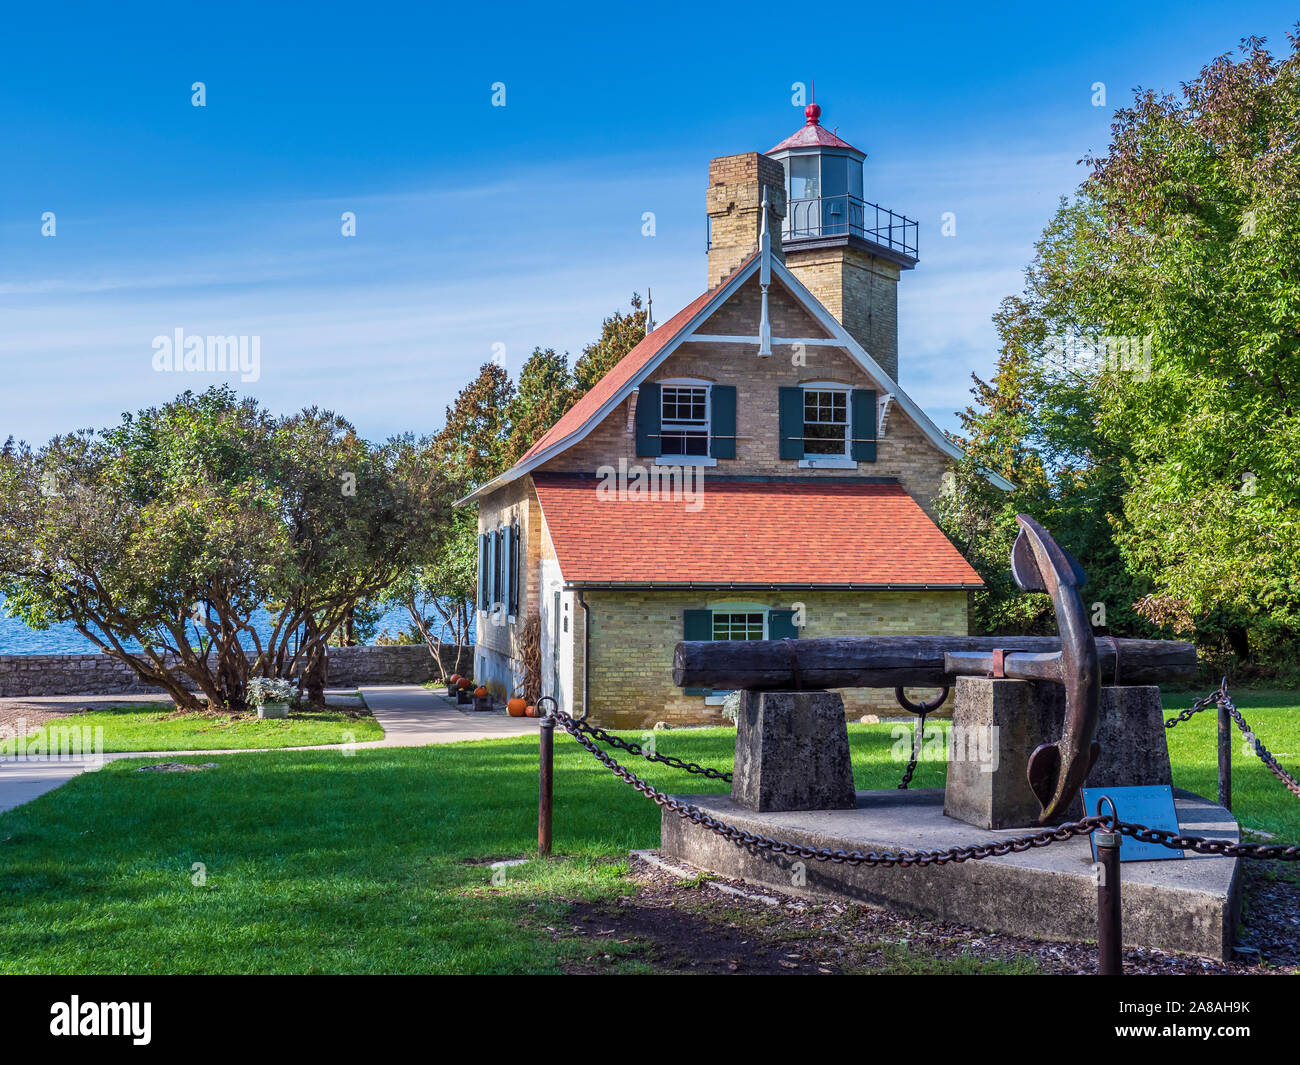 Fishing Battery Lighthouse, Maryland at